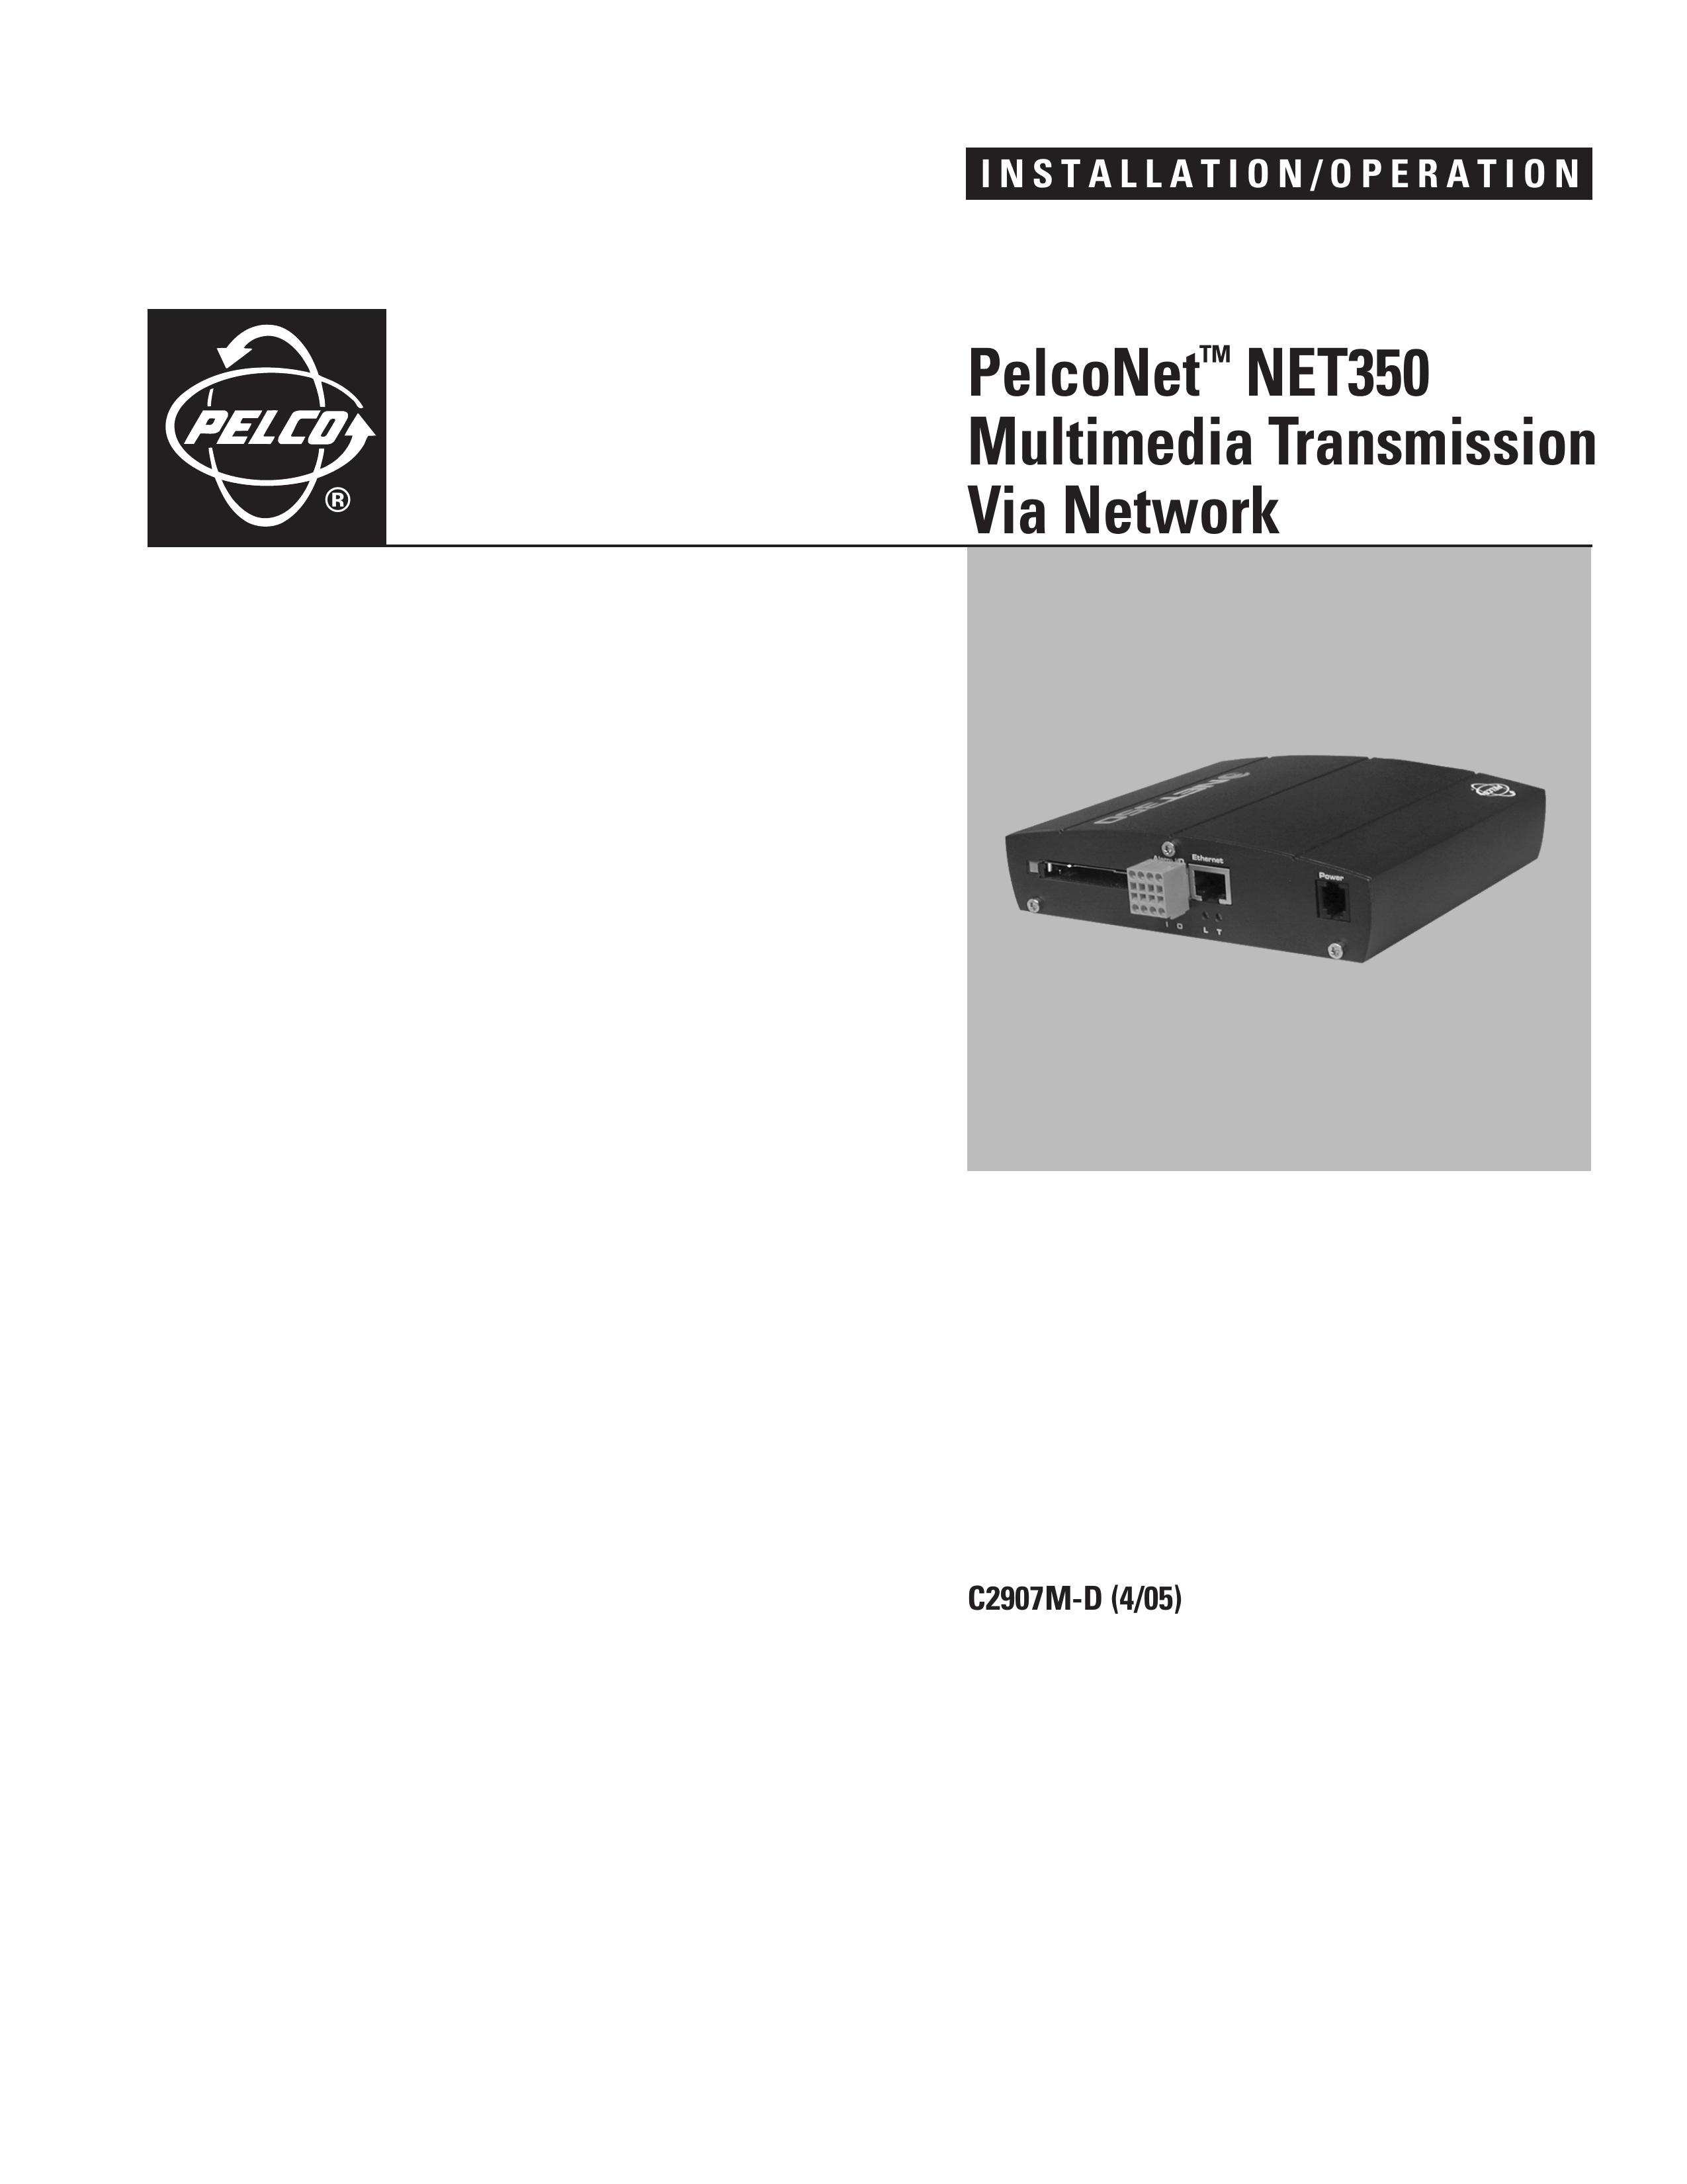 Pelco Net350 Pacemaker User Manual